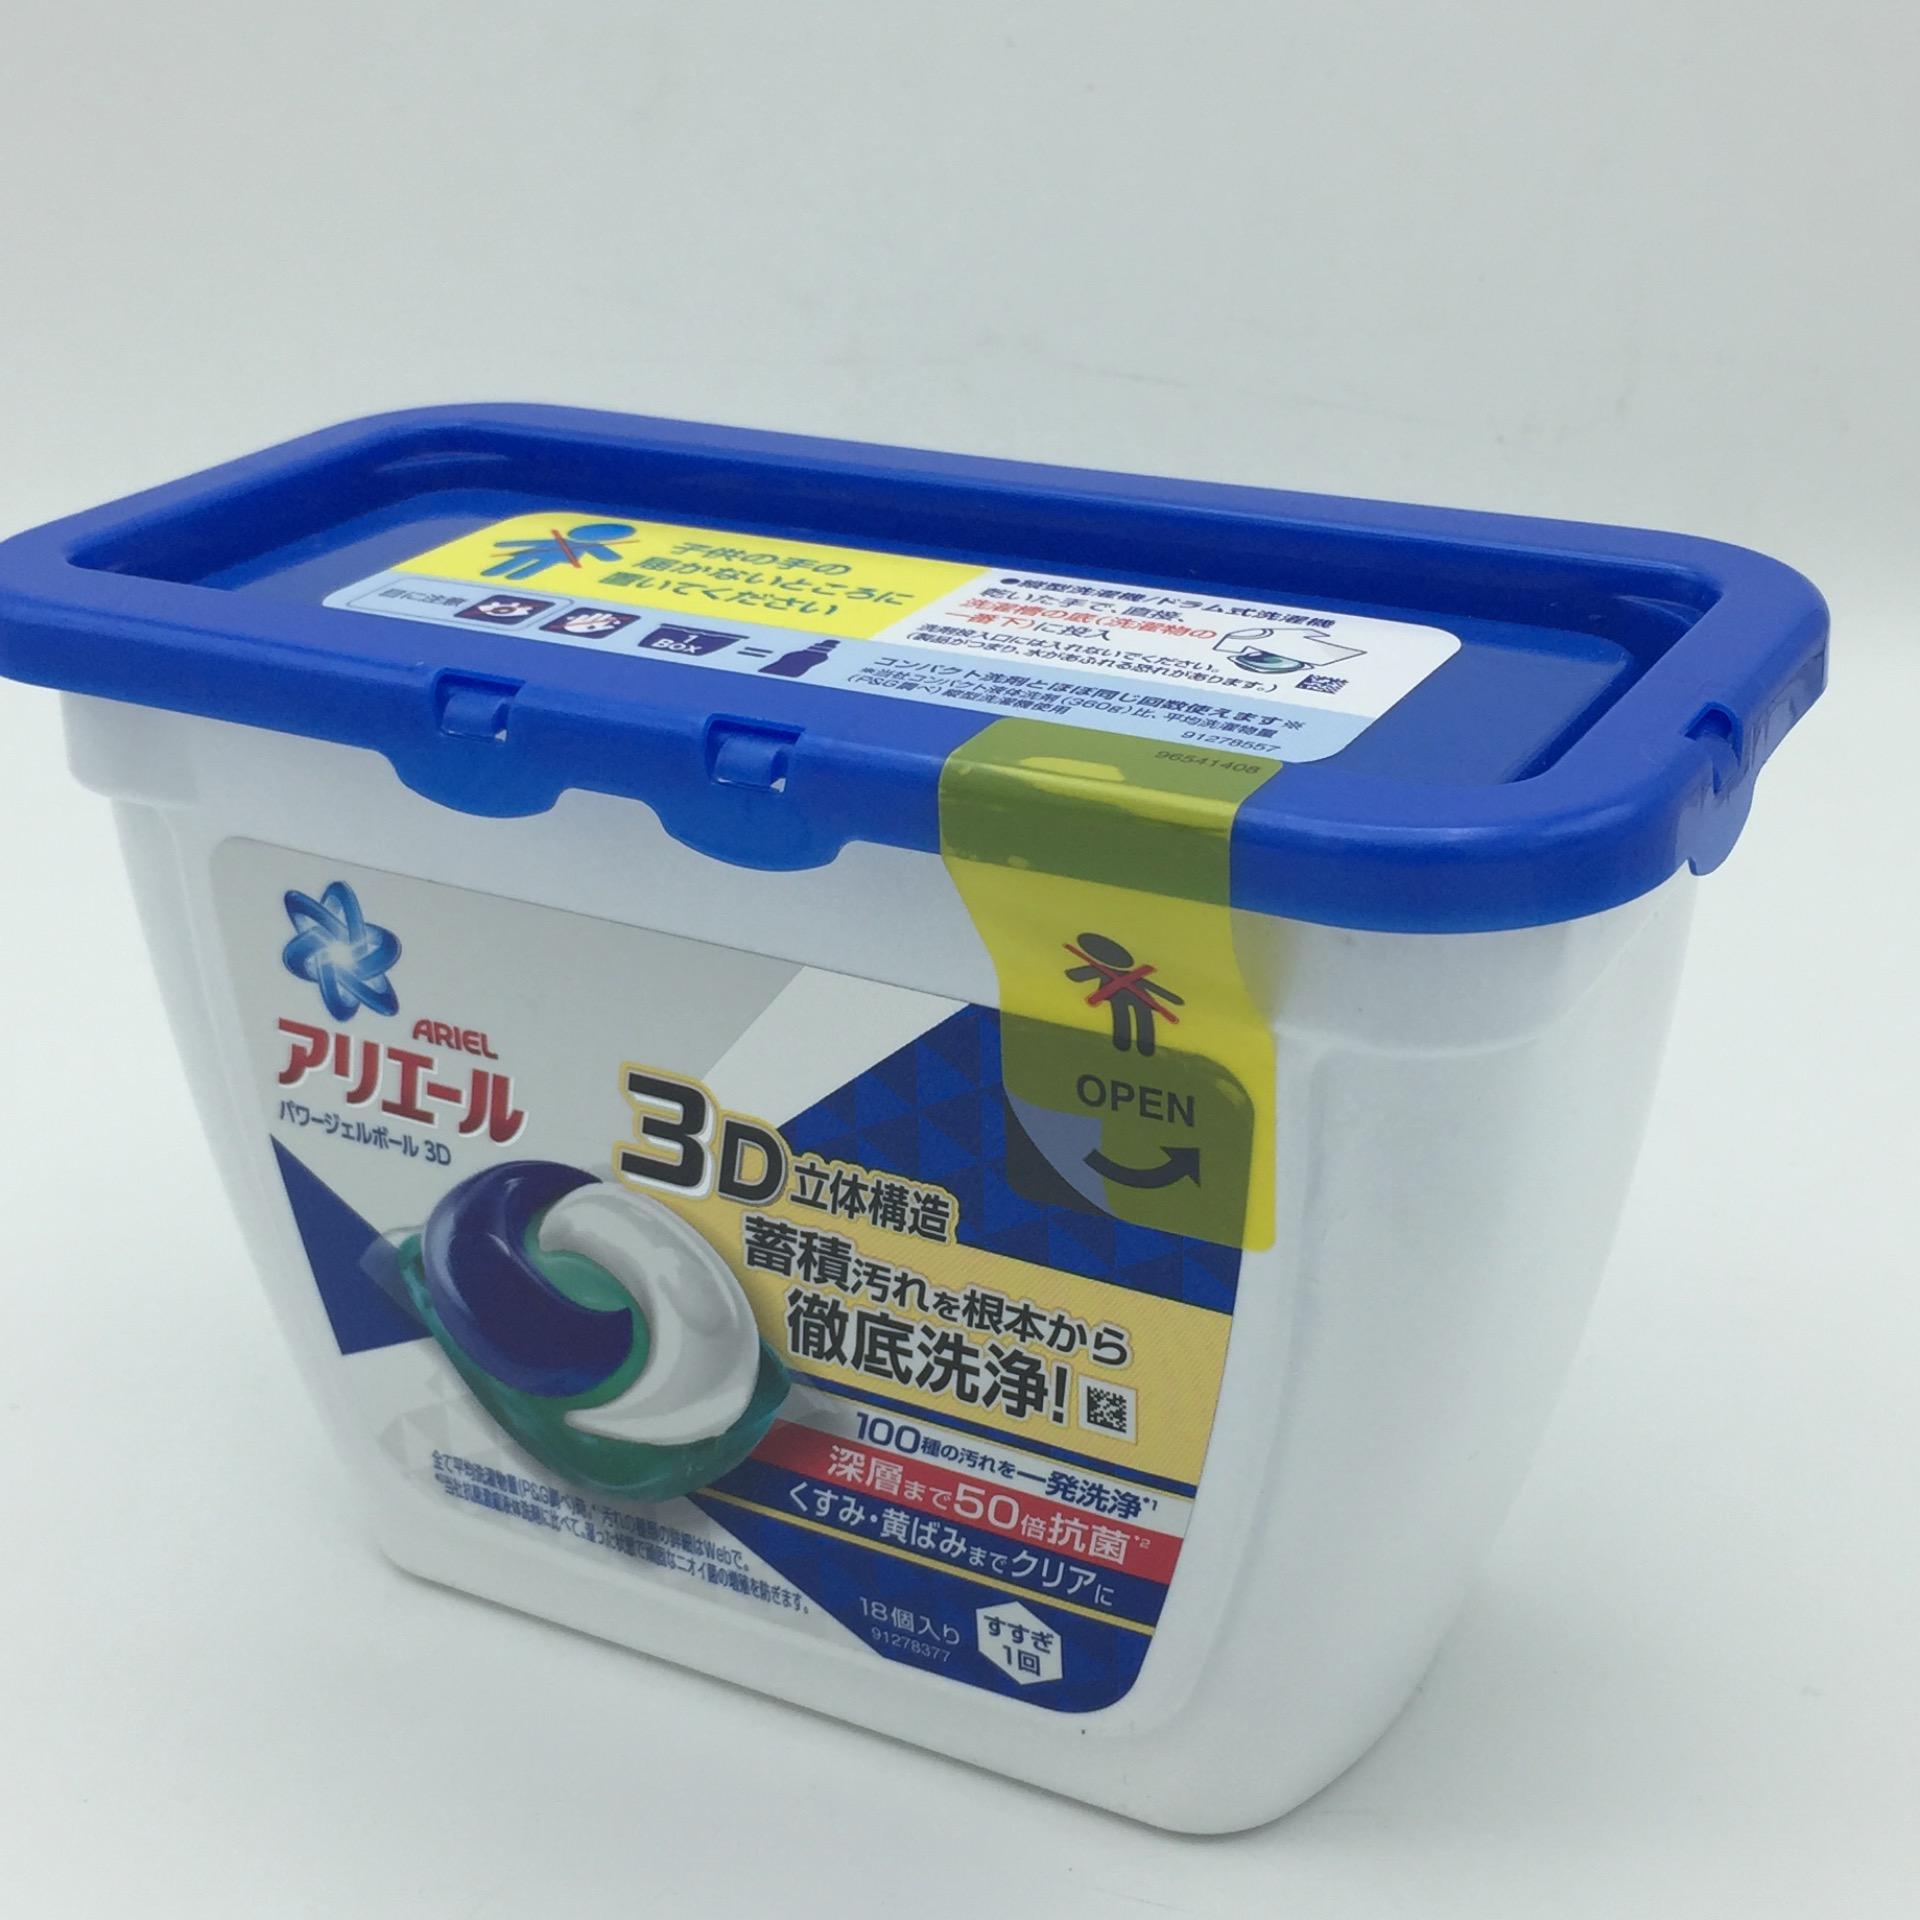 SAHA SALE เจลบอลซักผ้าญี่ปุ่น เจลบอลซักผ้า เจลซักผ้าแบบลูกบอล ซักผ้า น้ำยาซักผ้า หอม ทน นาน 3D Ariel Laundry Detergent Power Gel Ball 3D Body 18 Pieces Daily Necessities